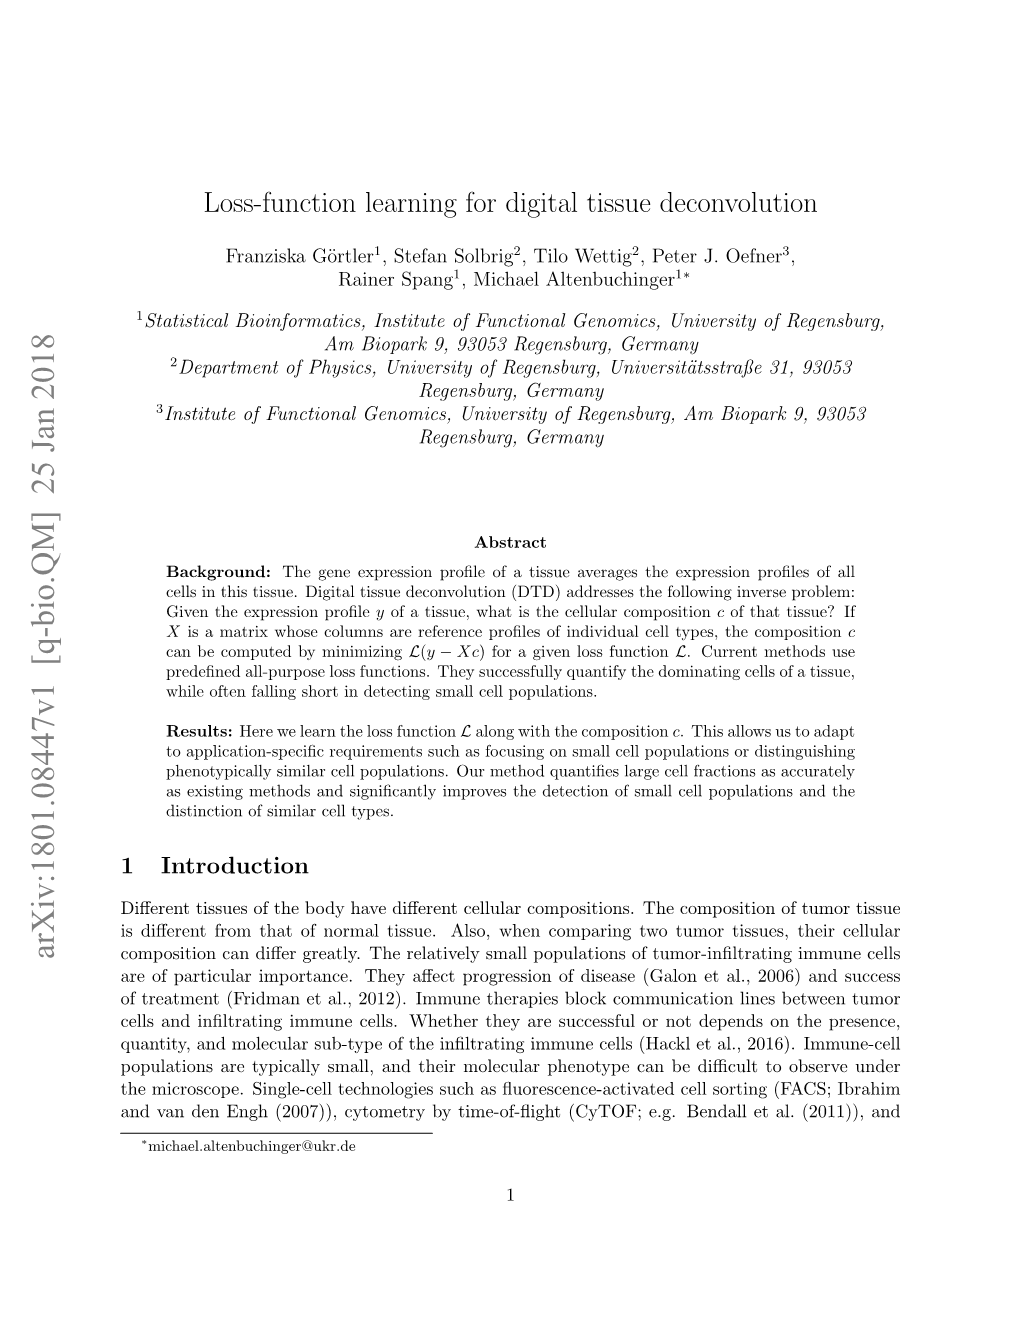 Loss-Function Learning for Digital Tissue Deconvolution